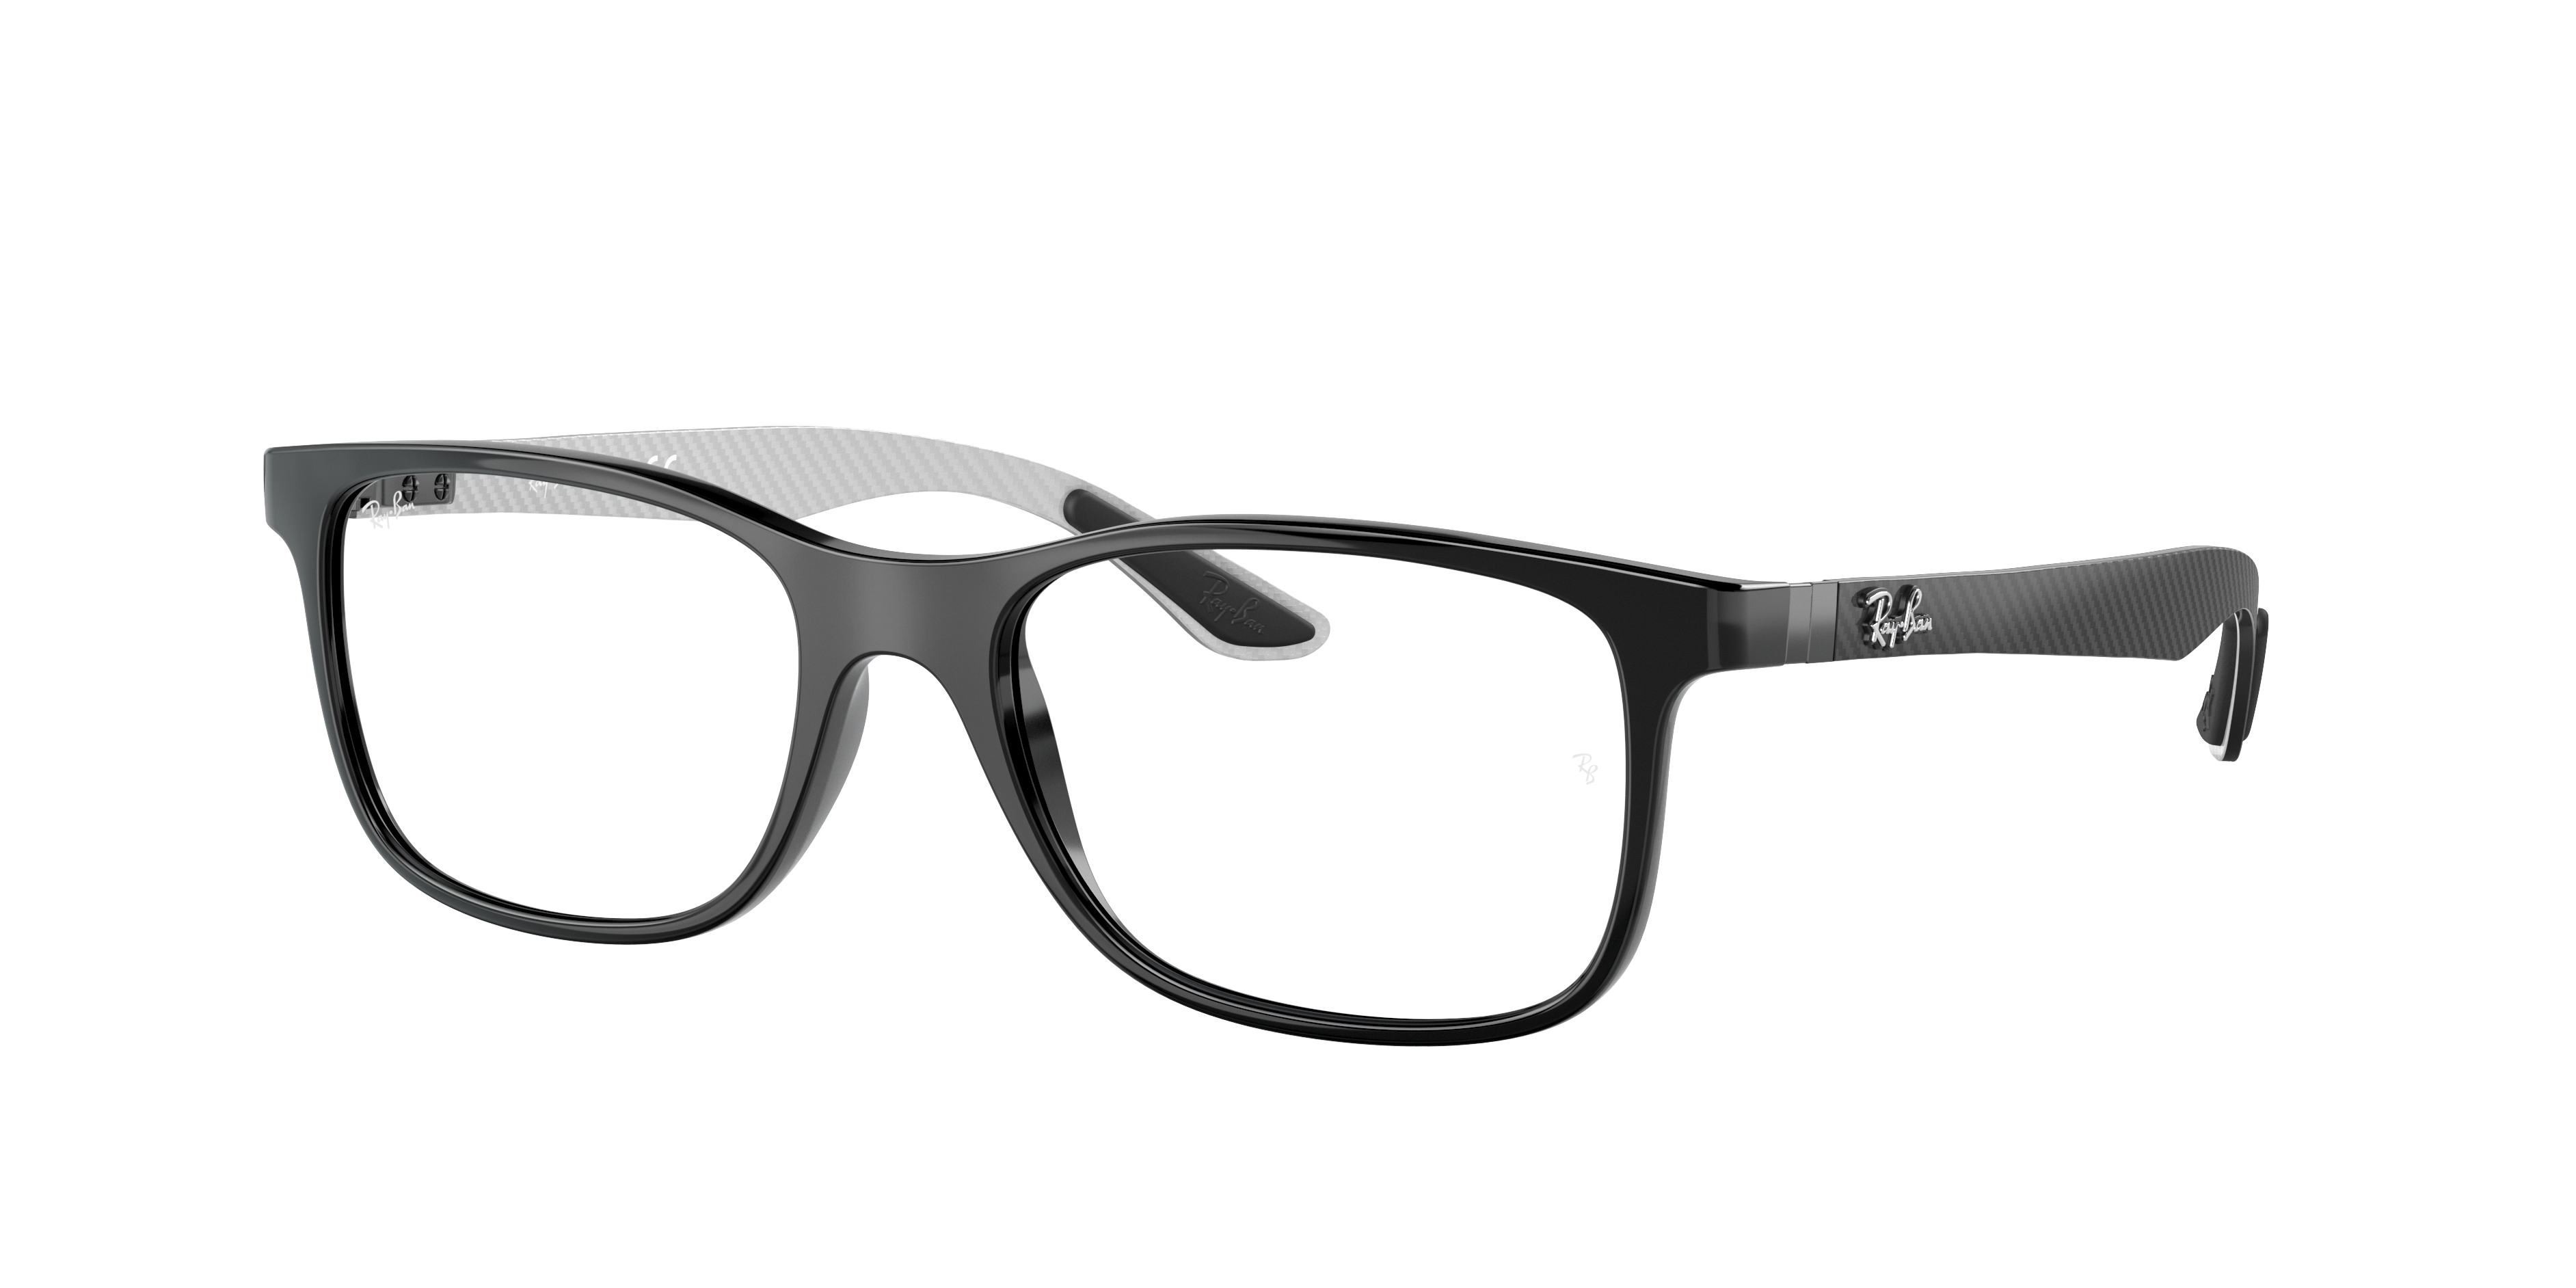 Rb8903 Optics Eyeglasses with Black Frame | Ray-Ban®